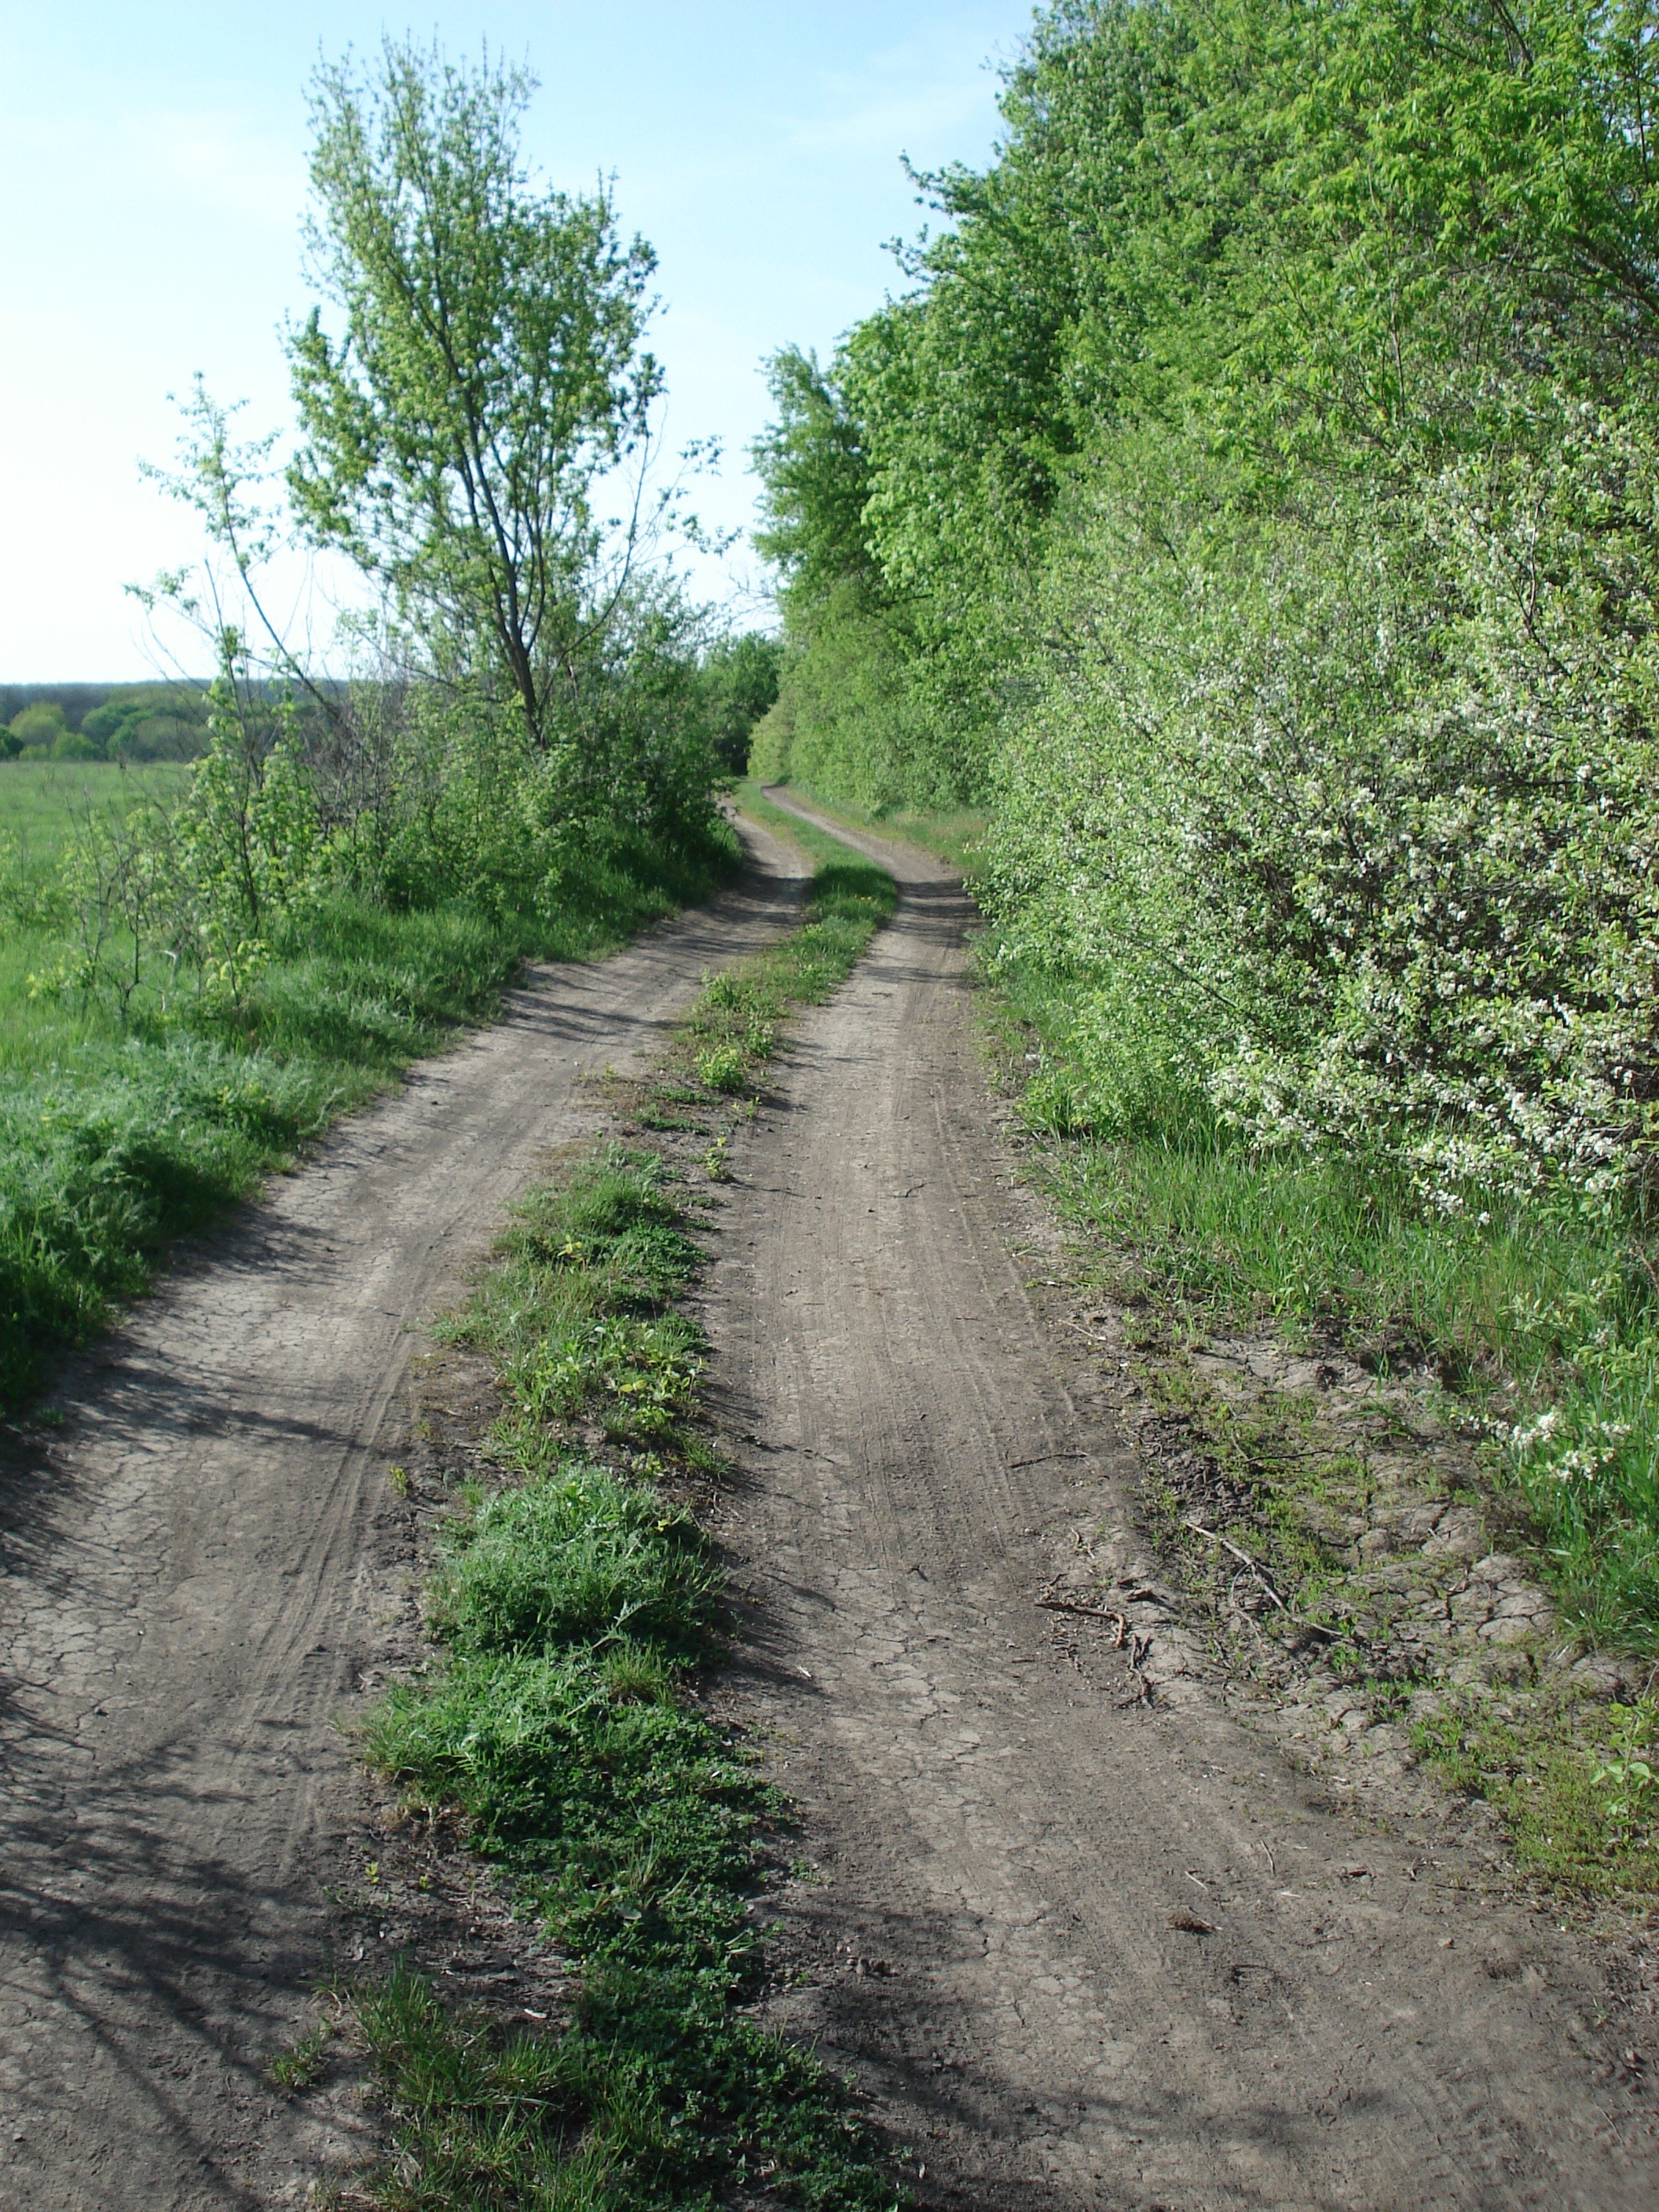 Road, Country, Rural, Backroad, Dirt, the way forward, dirt road